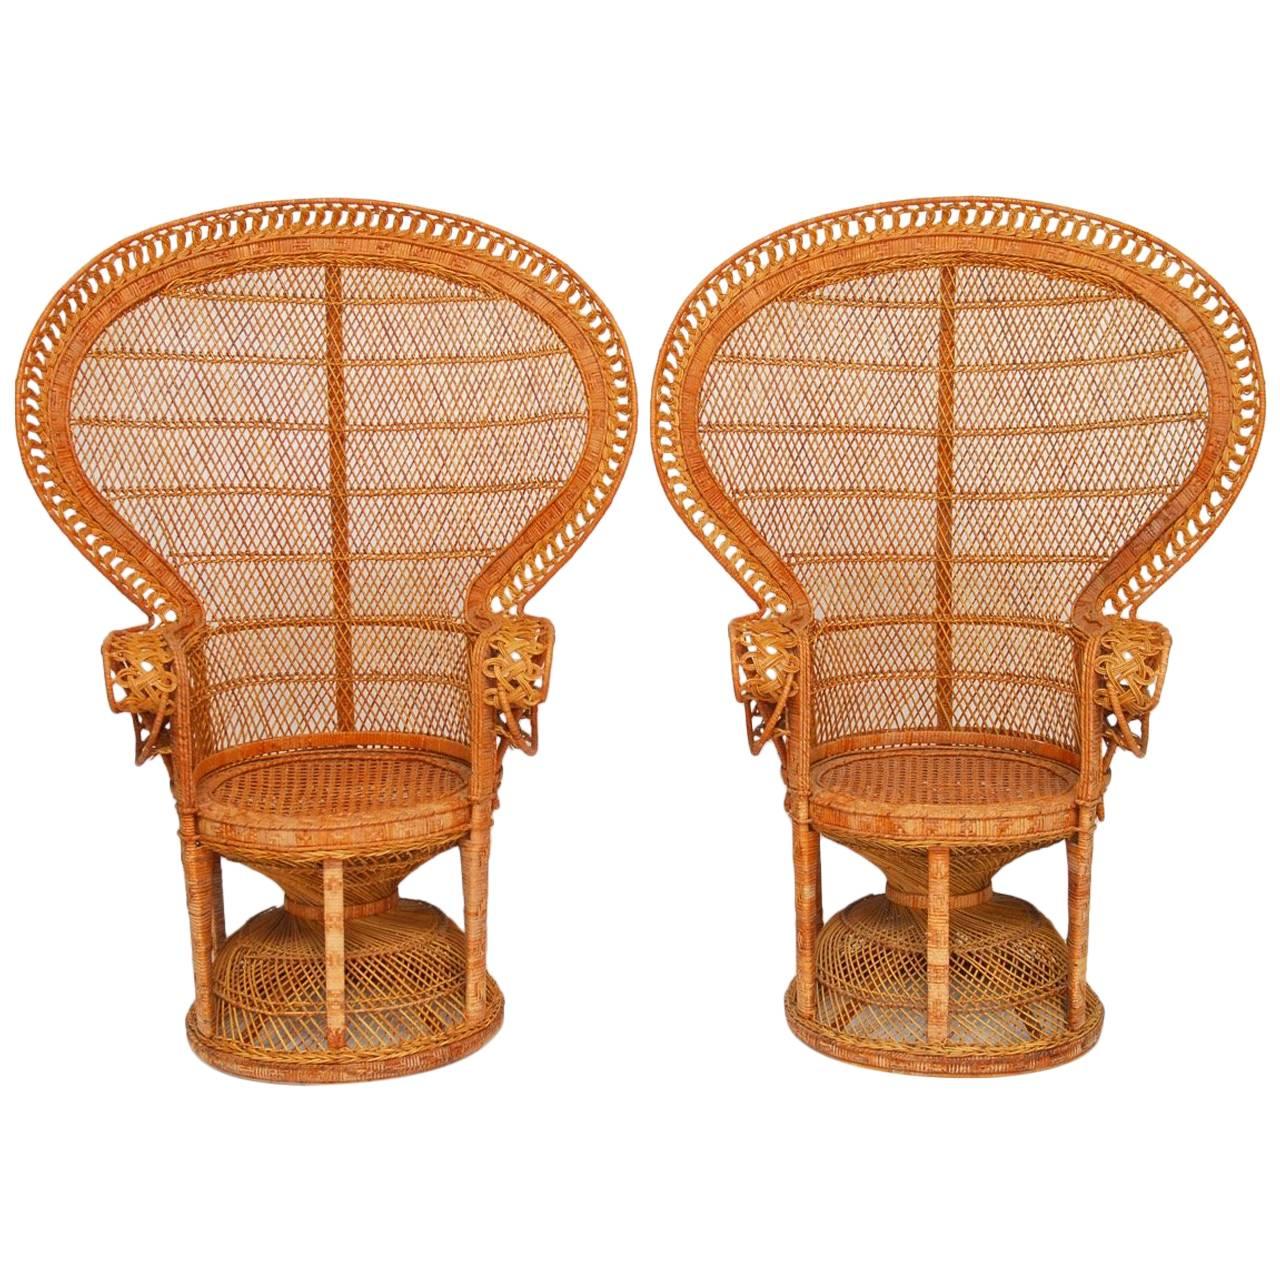 Pair of Rattan Emmanuel Peacock Chairs